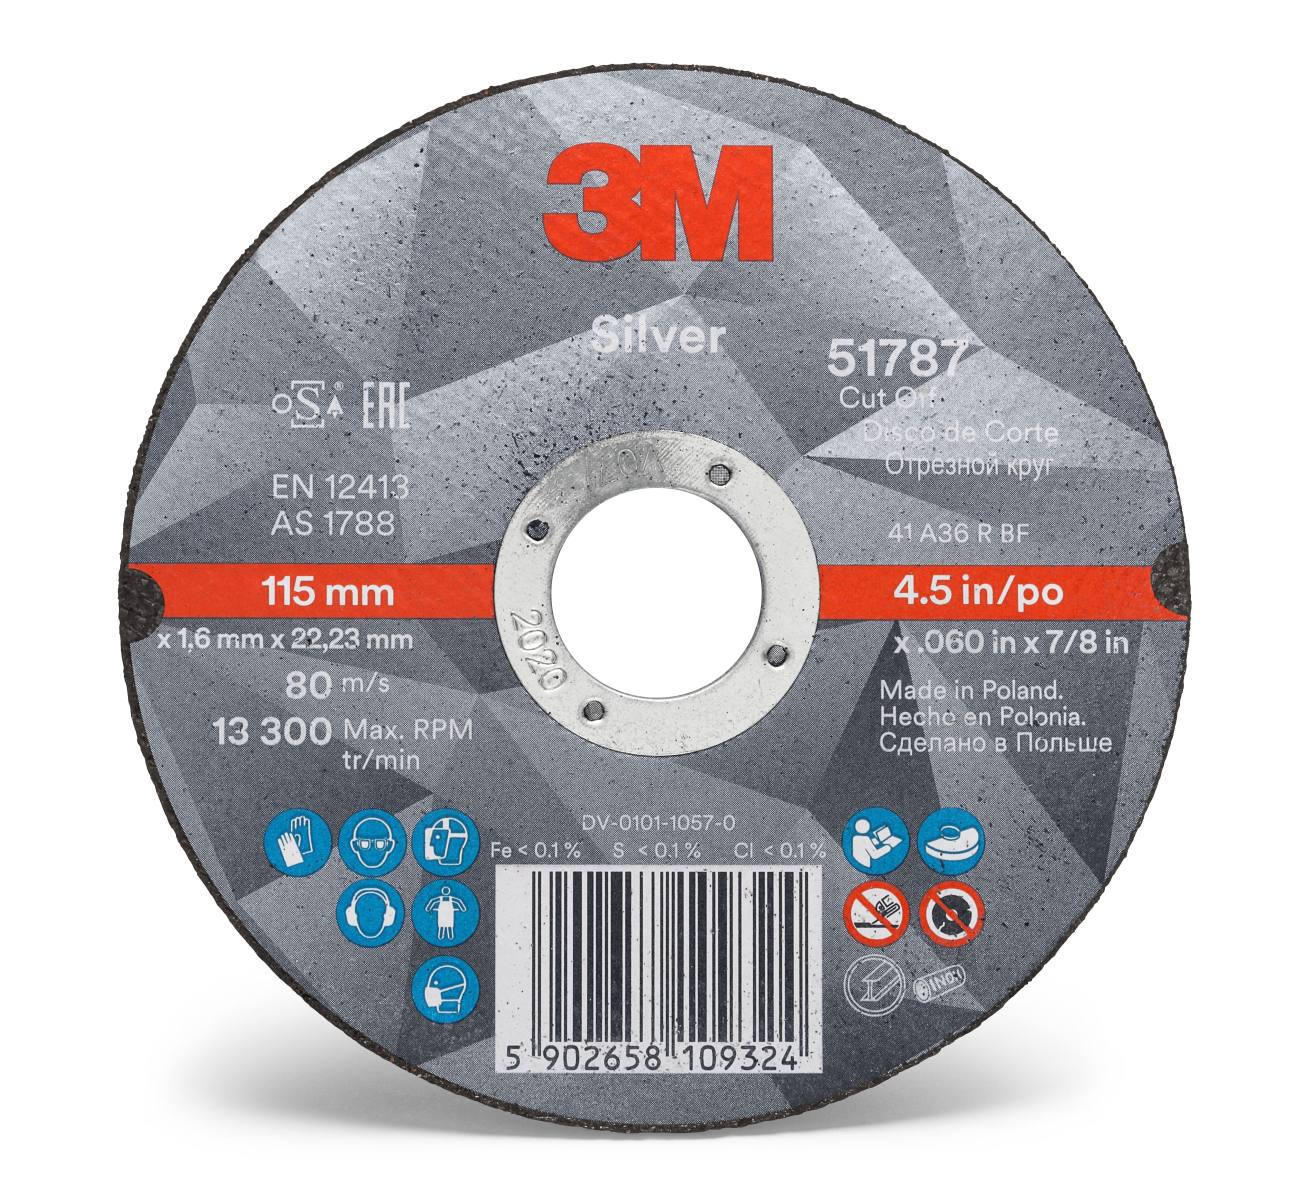 Disco da taglio 3M Silver Cut-Off, 75 mm, 1,6 mm, 10 mm, T41, 51769